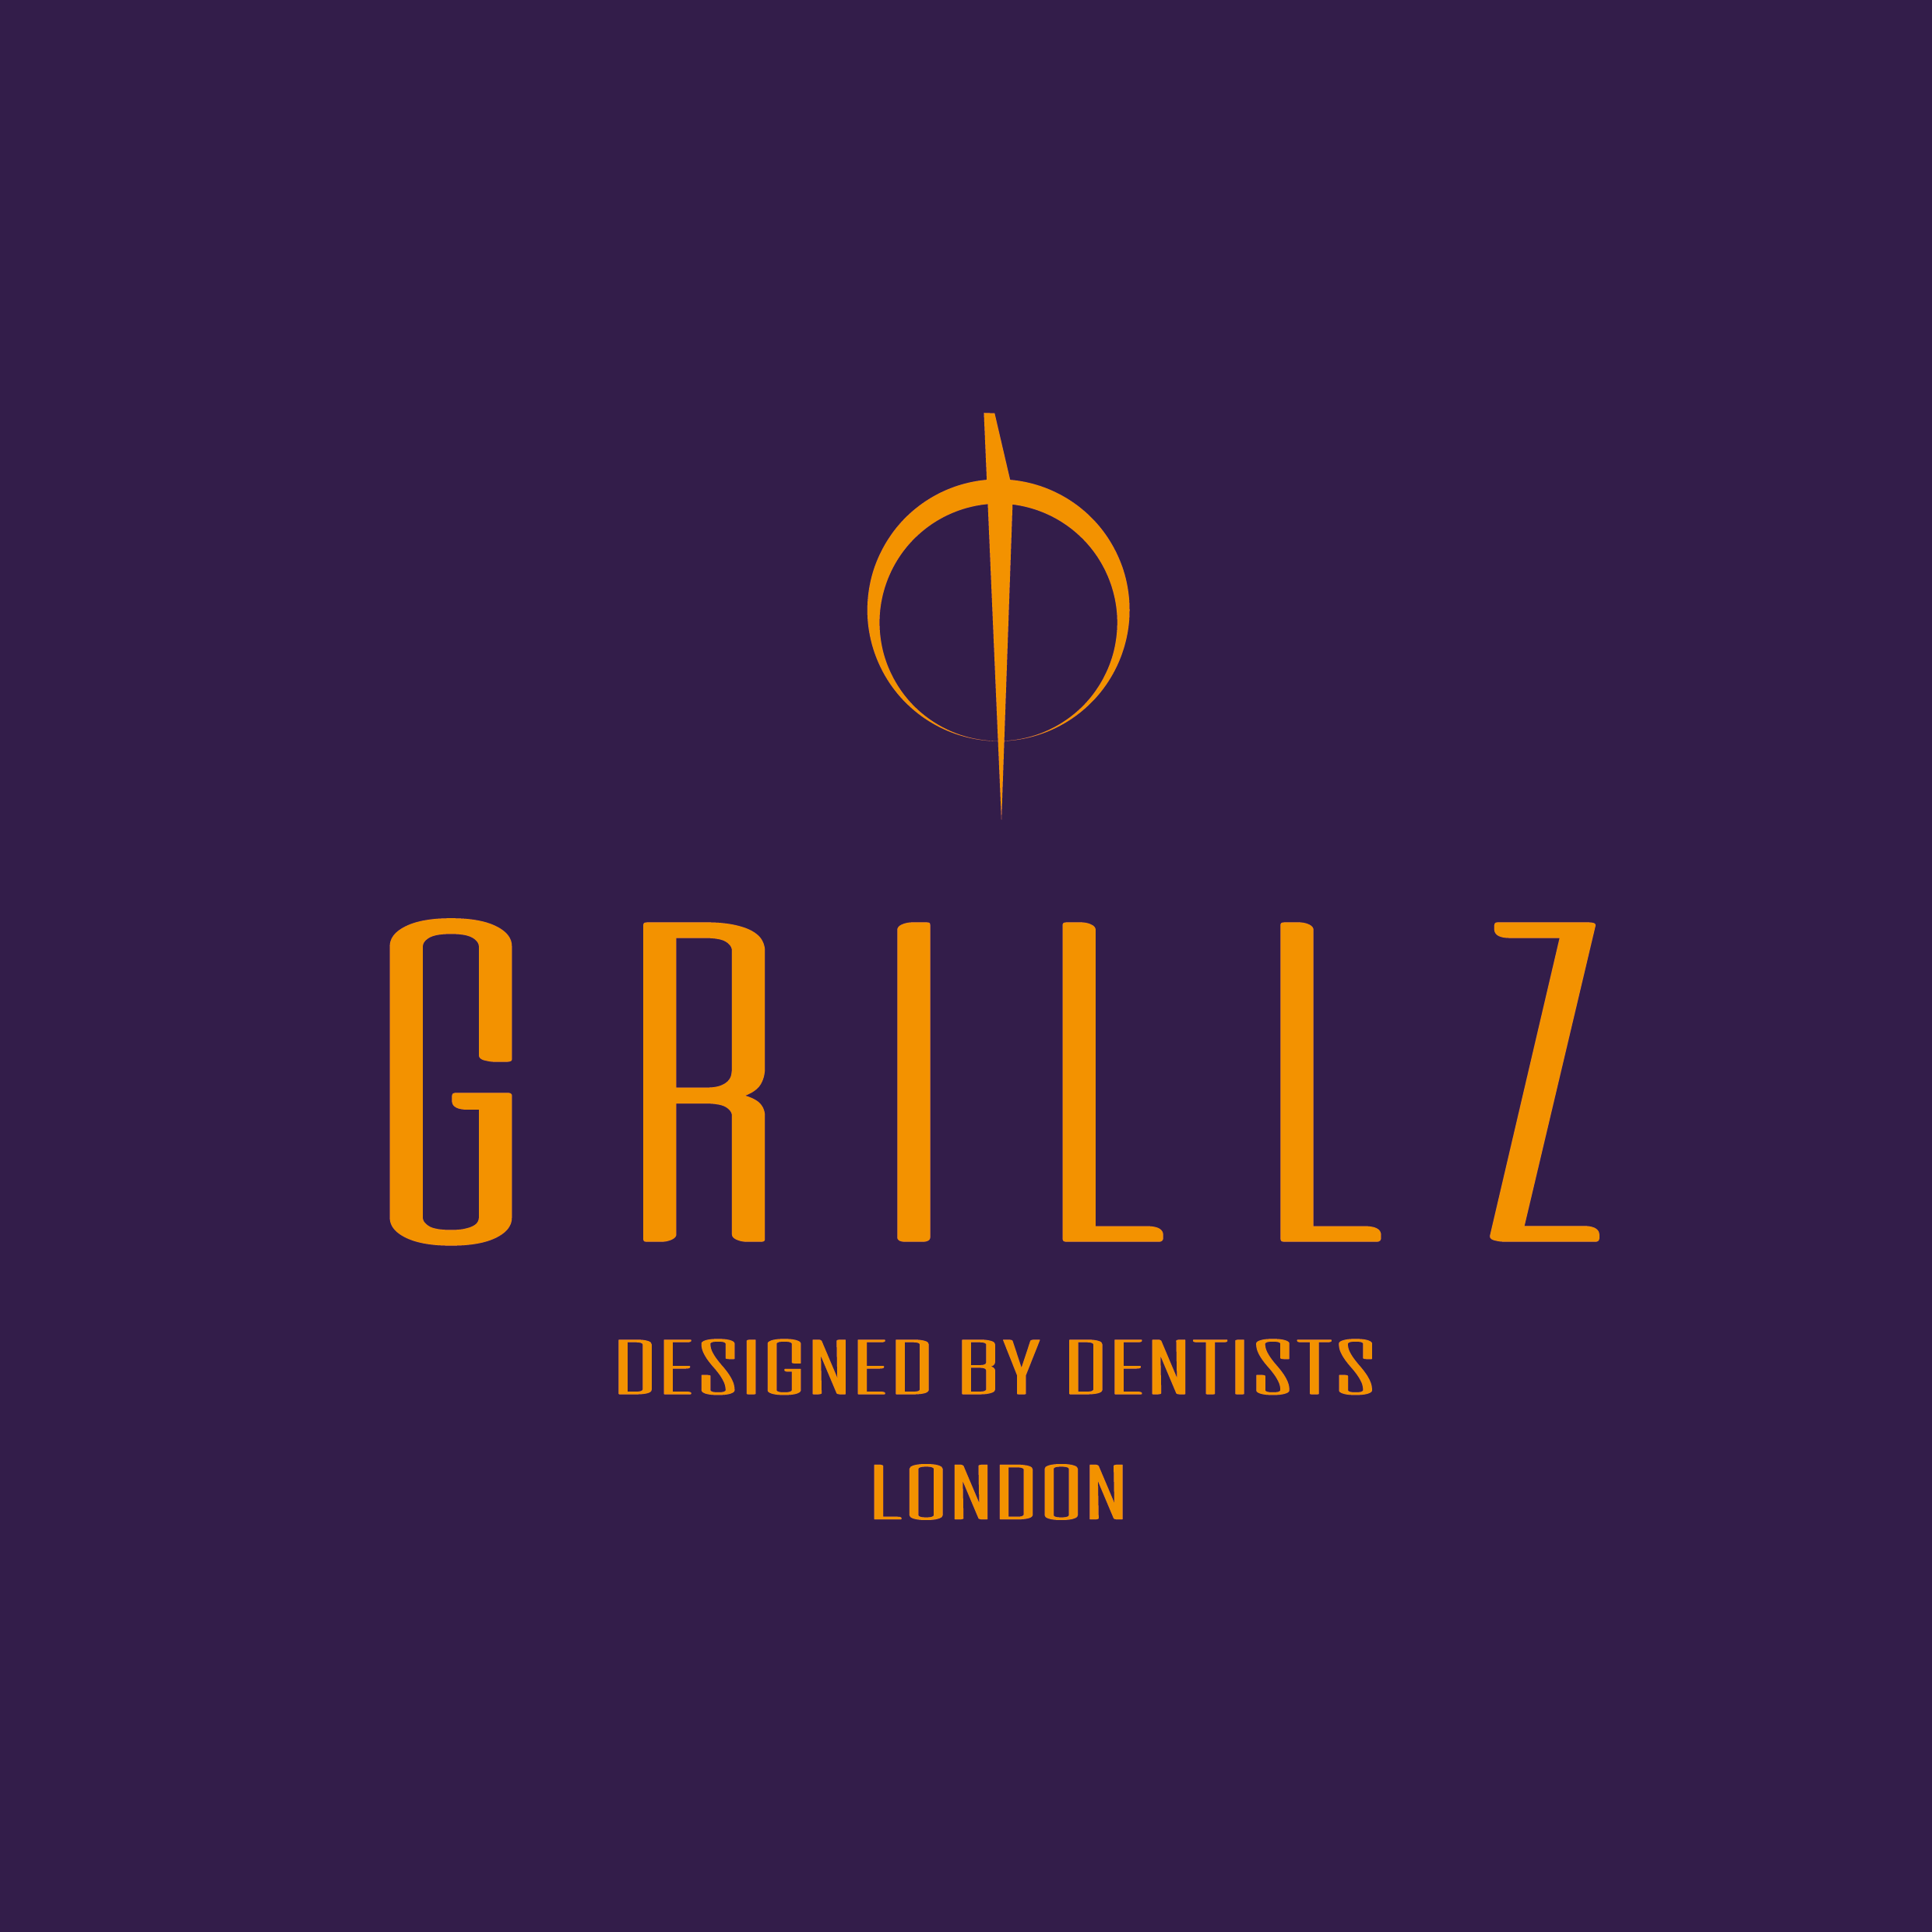 Grillz-london-01